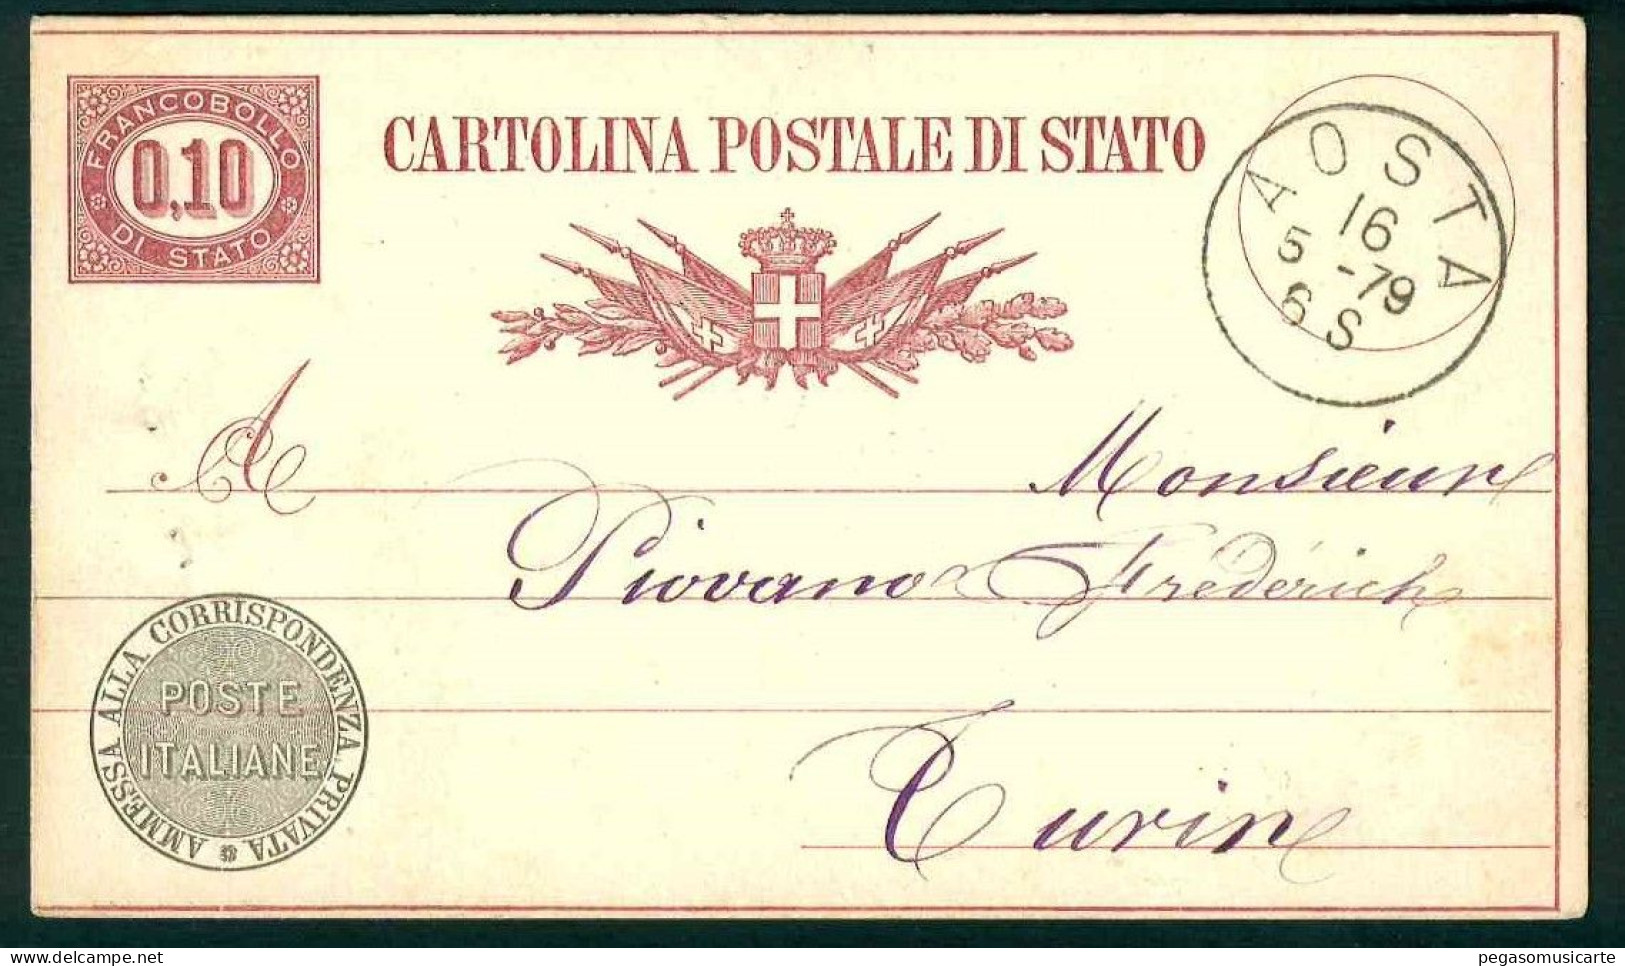 VZ098 - CARTOLINA POSTALE DI STATO CENTESIMI 0,10 - STORIA POSTALE - 1879 AOSTA TORINO - INTERO POSTALE - Ganzsachen